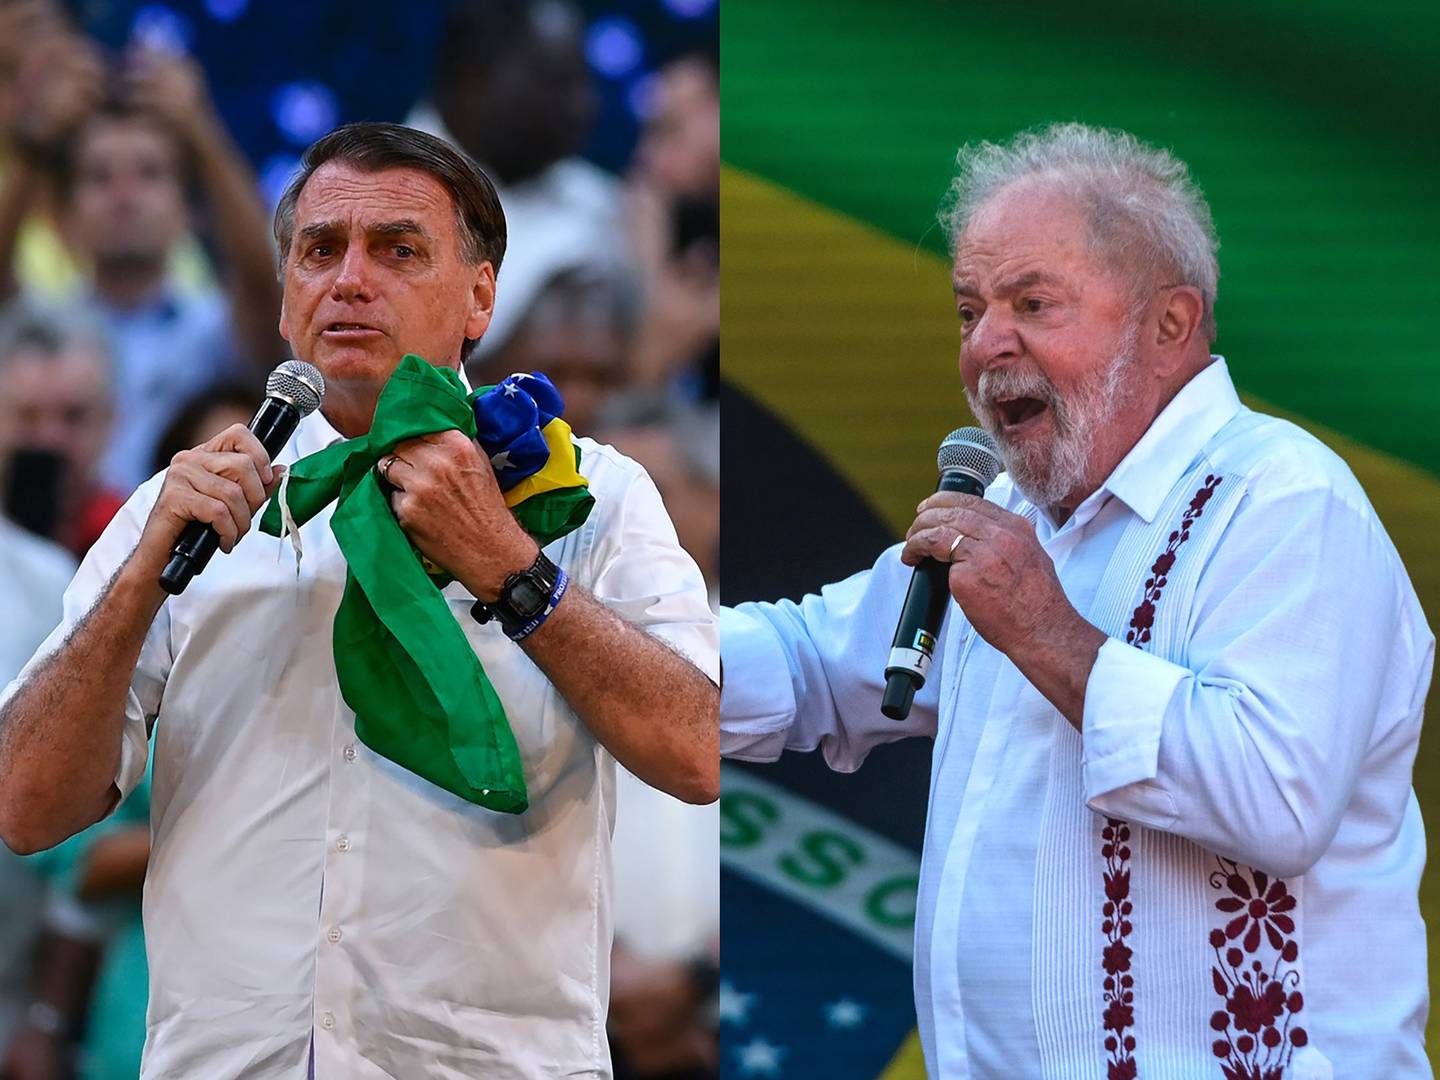 Jair Bolsonaro y Luiz Inácio Lula da Silva